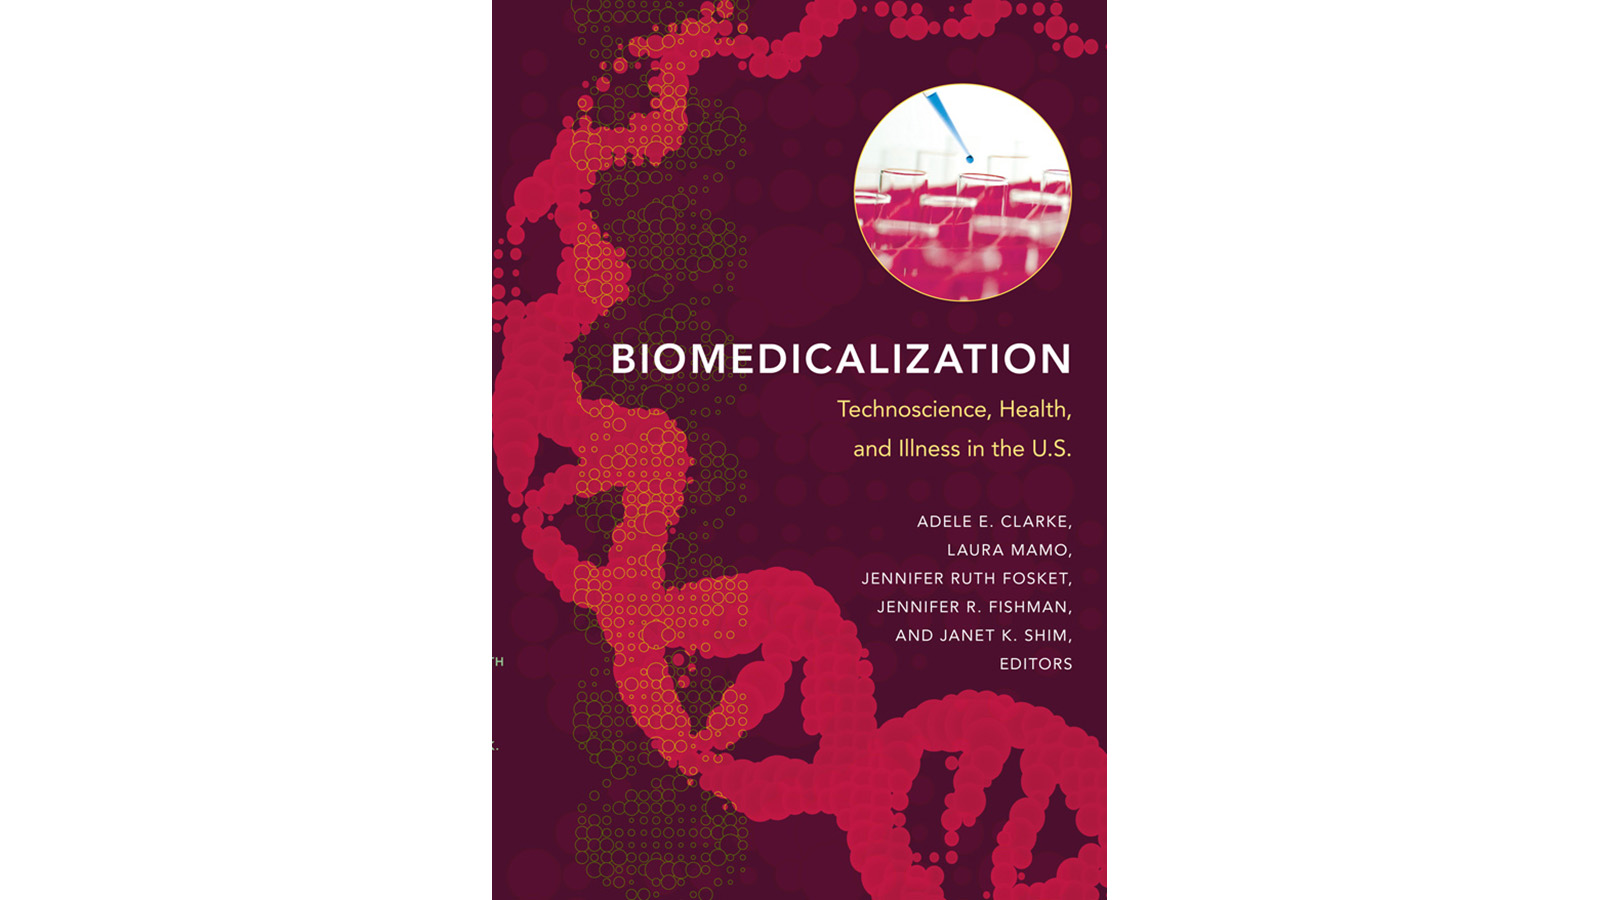 Laura Mamo's book, Biomedicalization: Technoscience, Health, and Illness in the U.S.